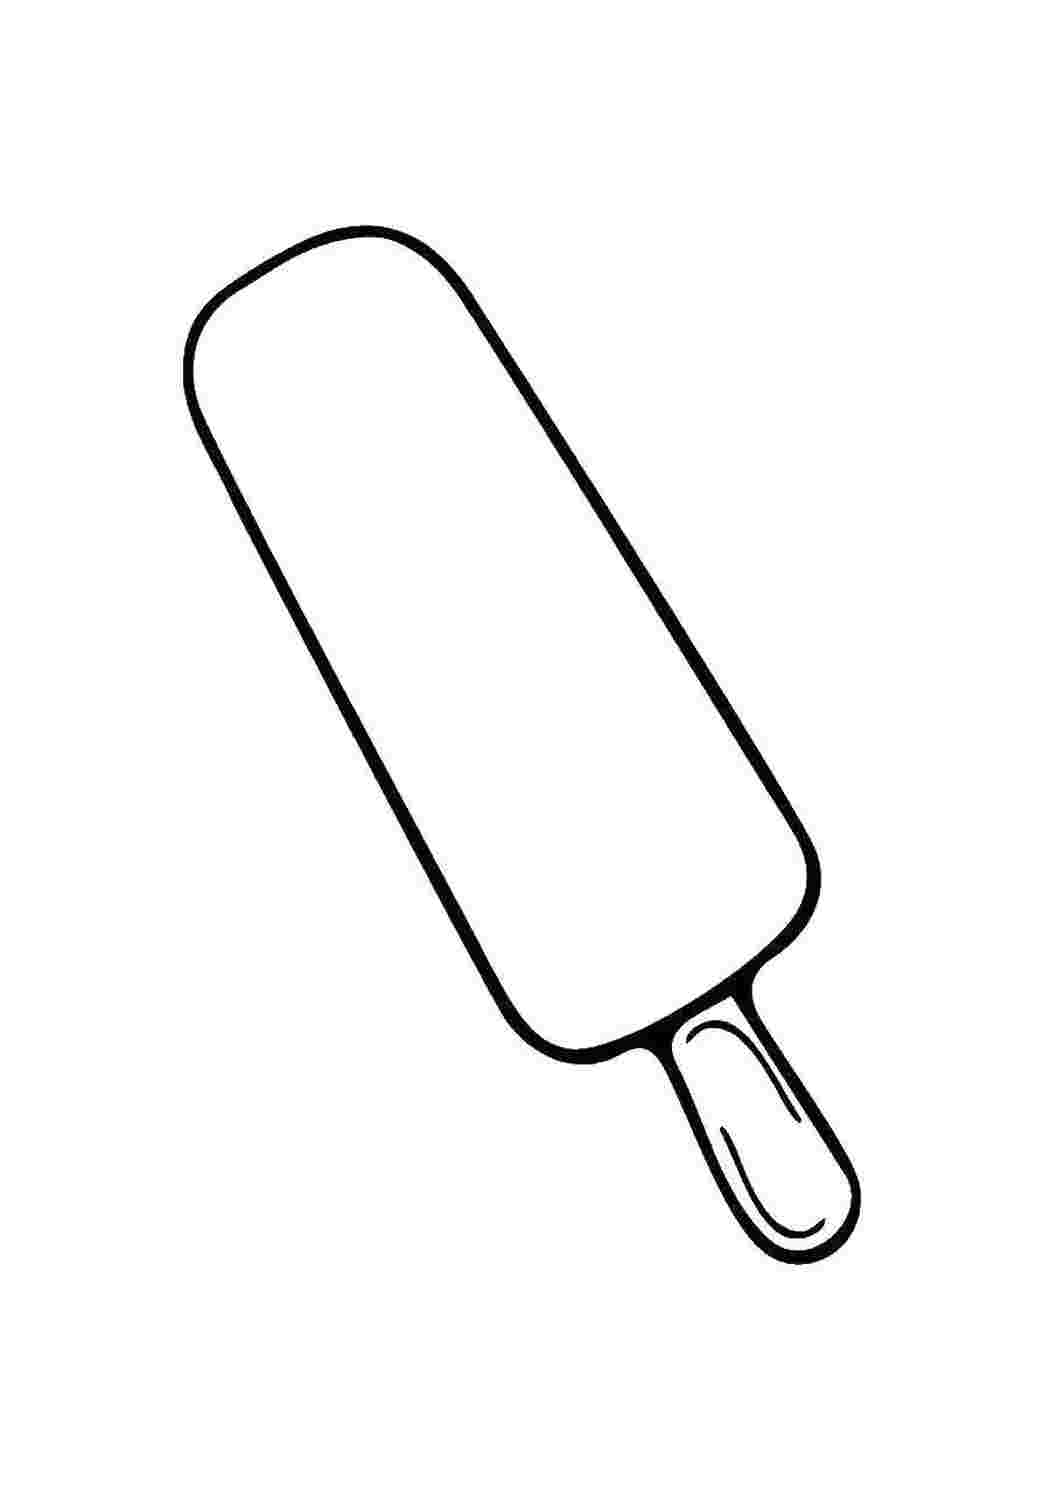 Раскраски Мороженое на палочке мороженое эскимо, палочка, мороженое